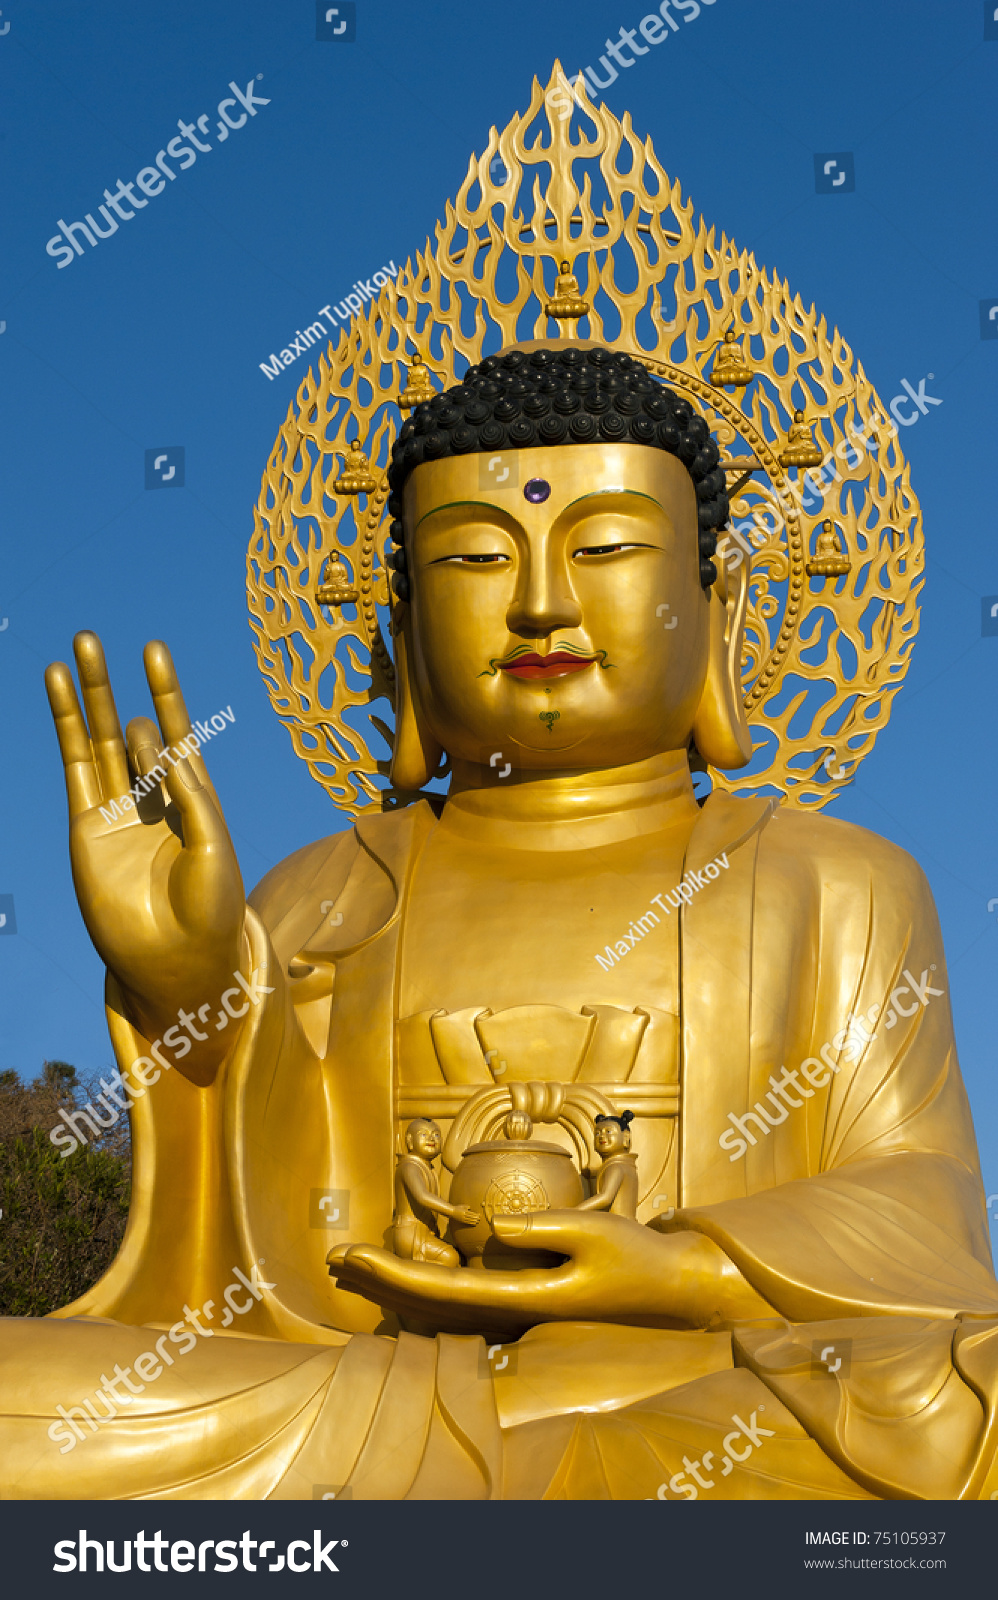 Golden Buddha Statue At Buddhist Temple Of Sanbanggulsa At Sanbangsan ...